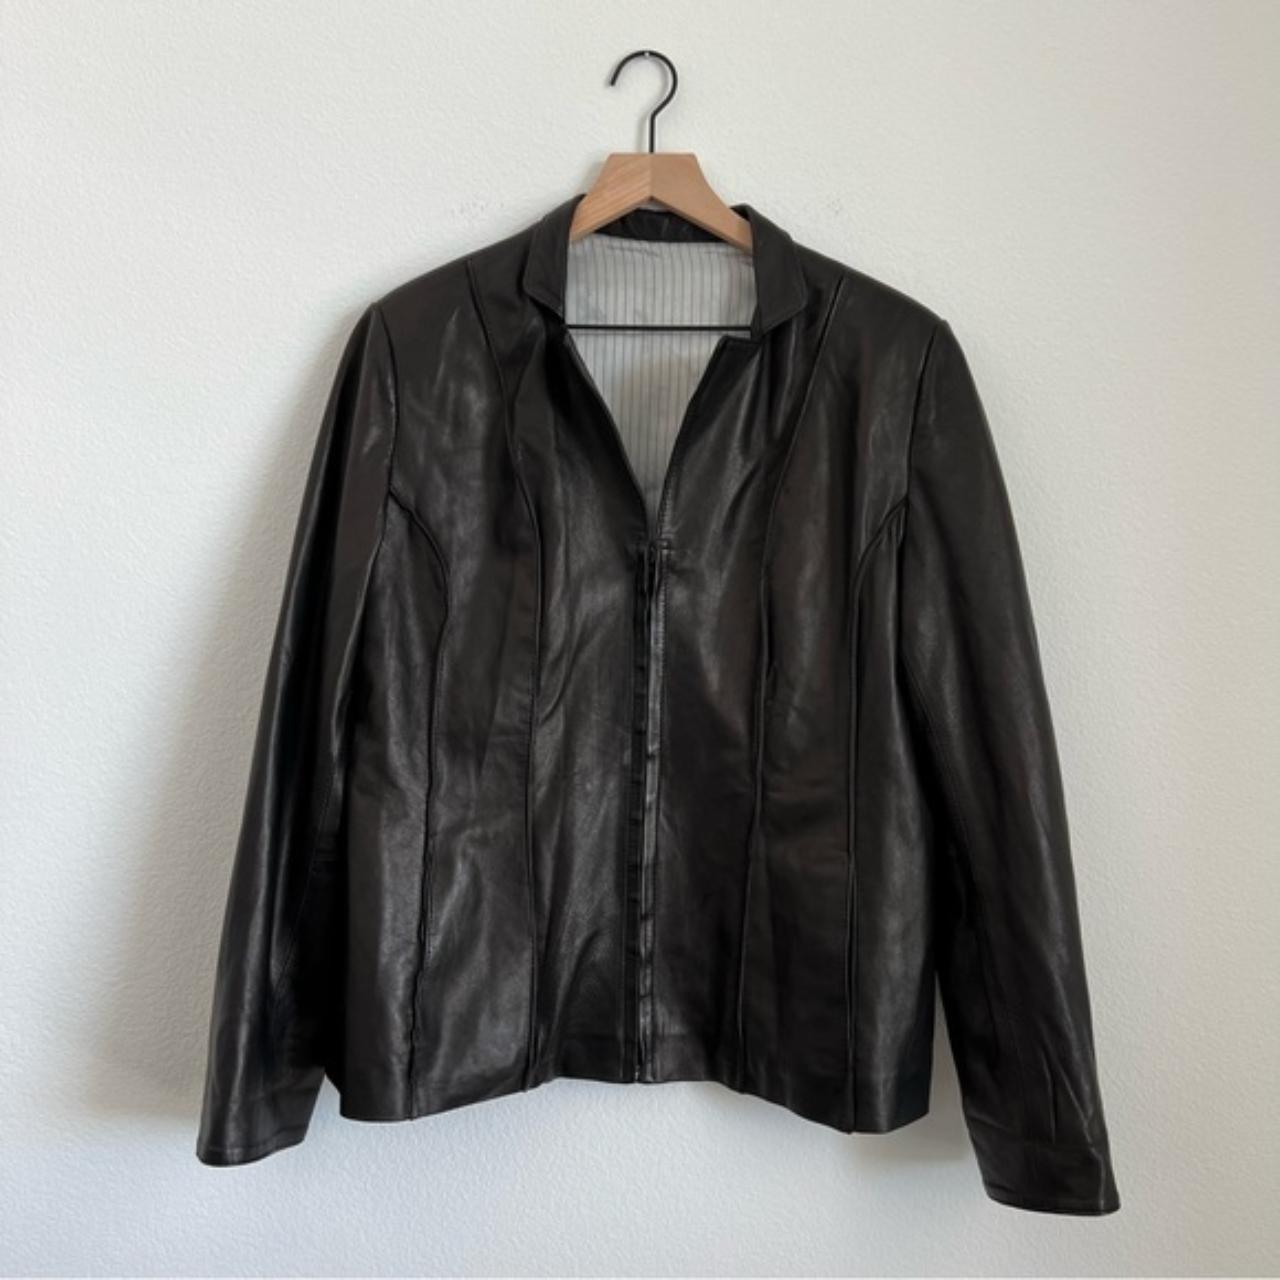 Sz48 Uru Recoleta Black Leather Jacket Rich soft... - Depop